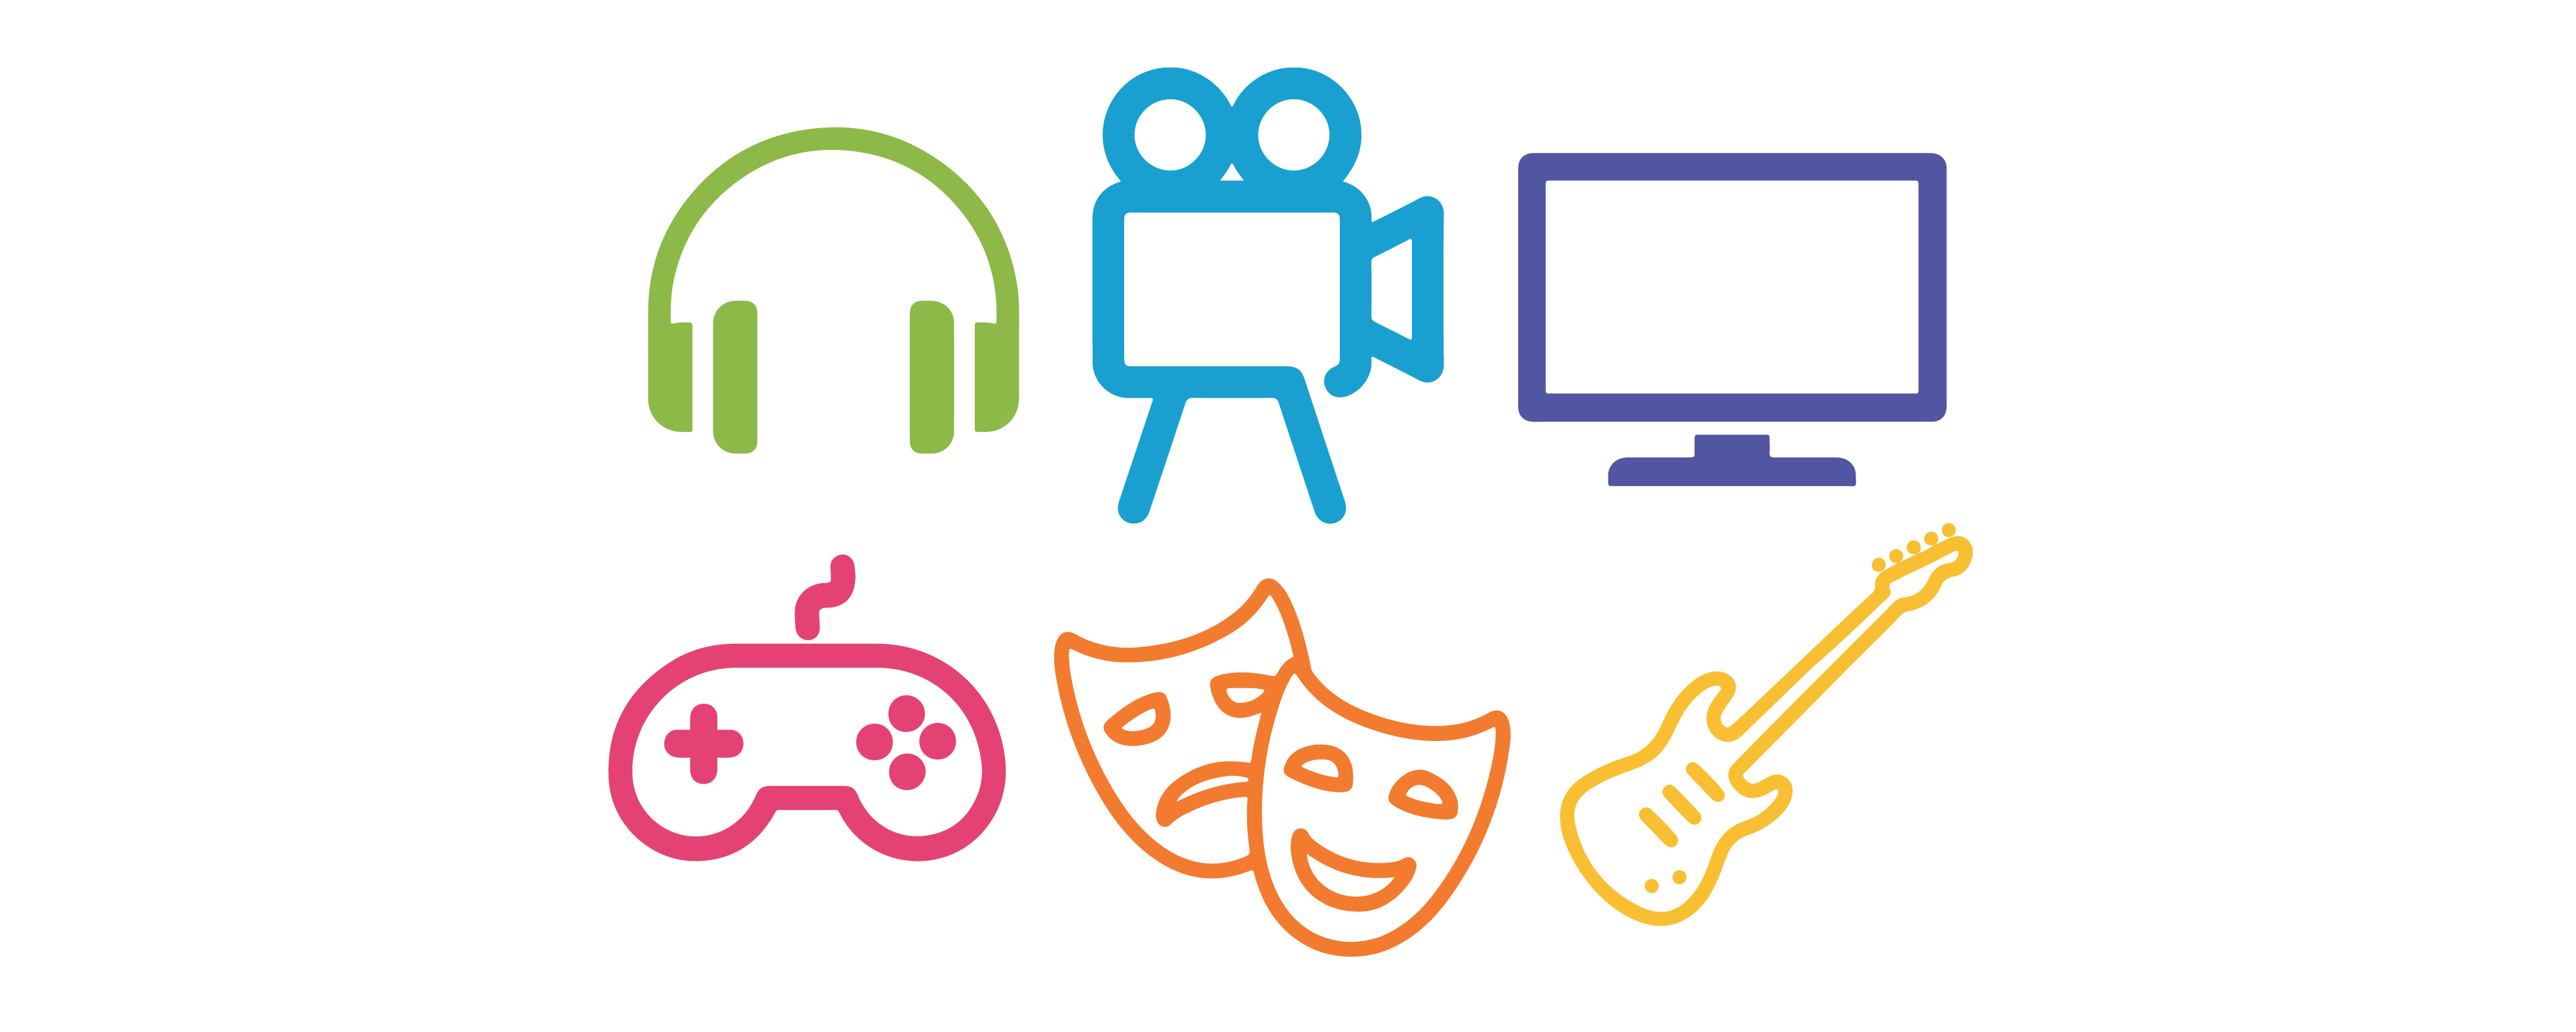 Green headphone icon, blue video camera icon, purple computer icon, pink video game controller icon, orange play mask icon, yellow guitar icon.